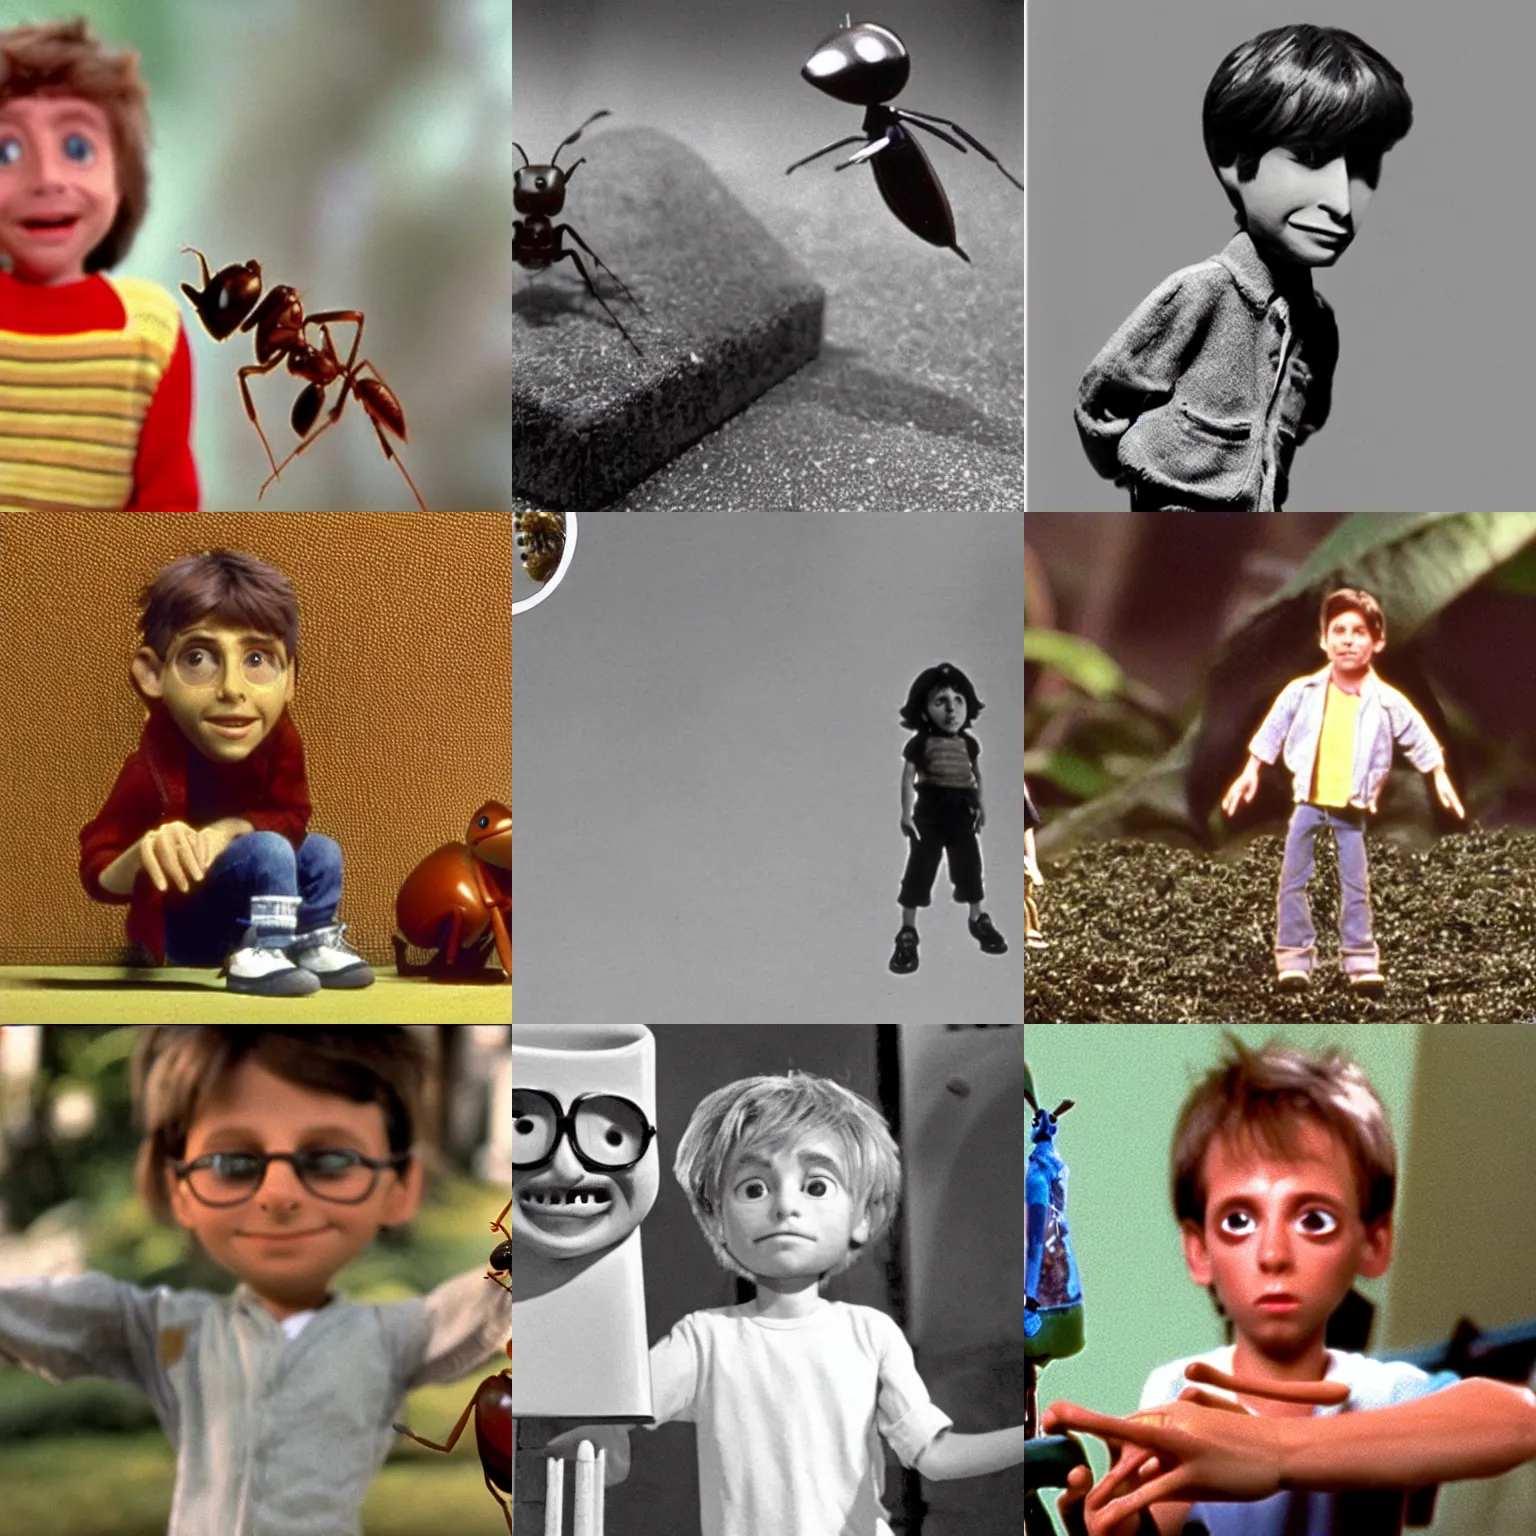 Prompt: A tiny shrunken man posing next to an ant, film still from 'Honey, I Shrunk the Kids'